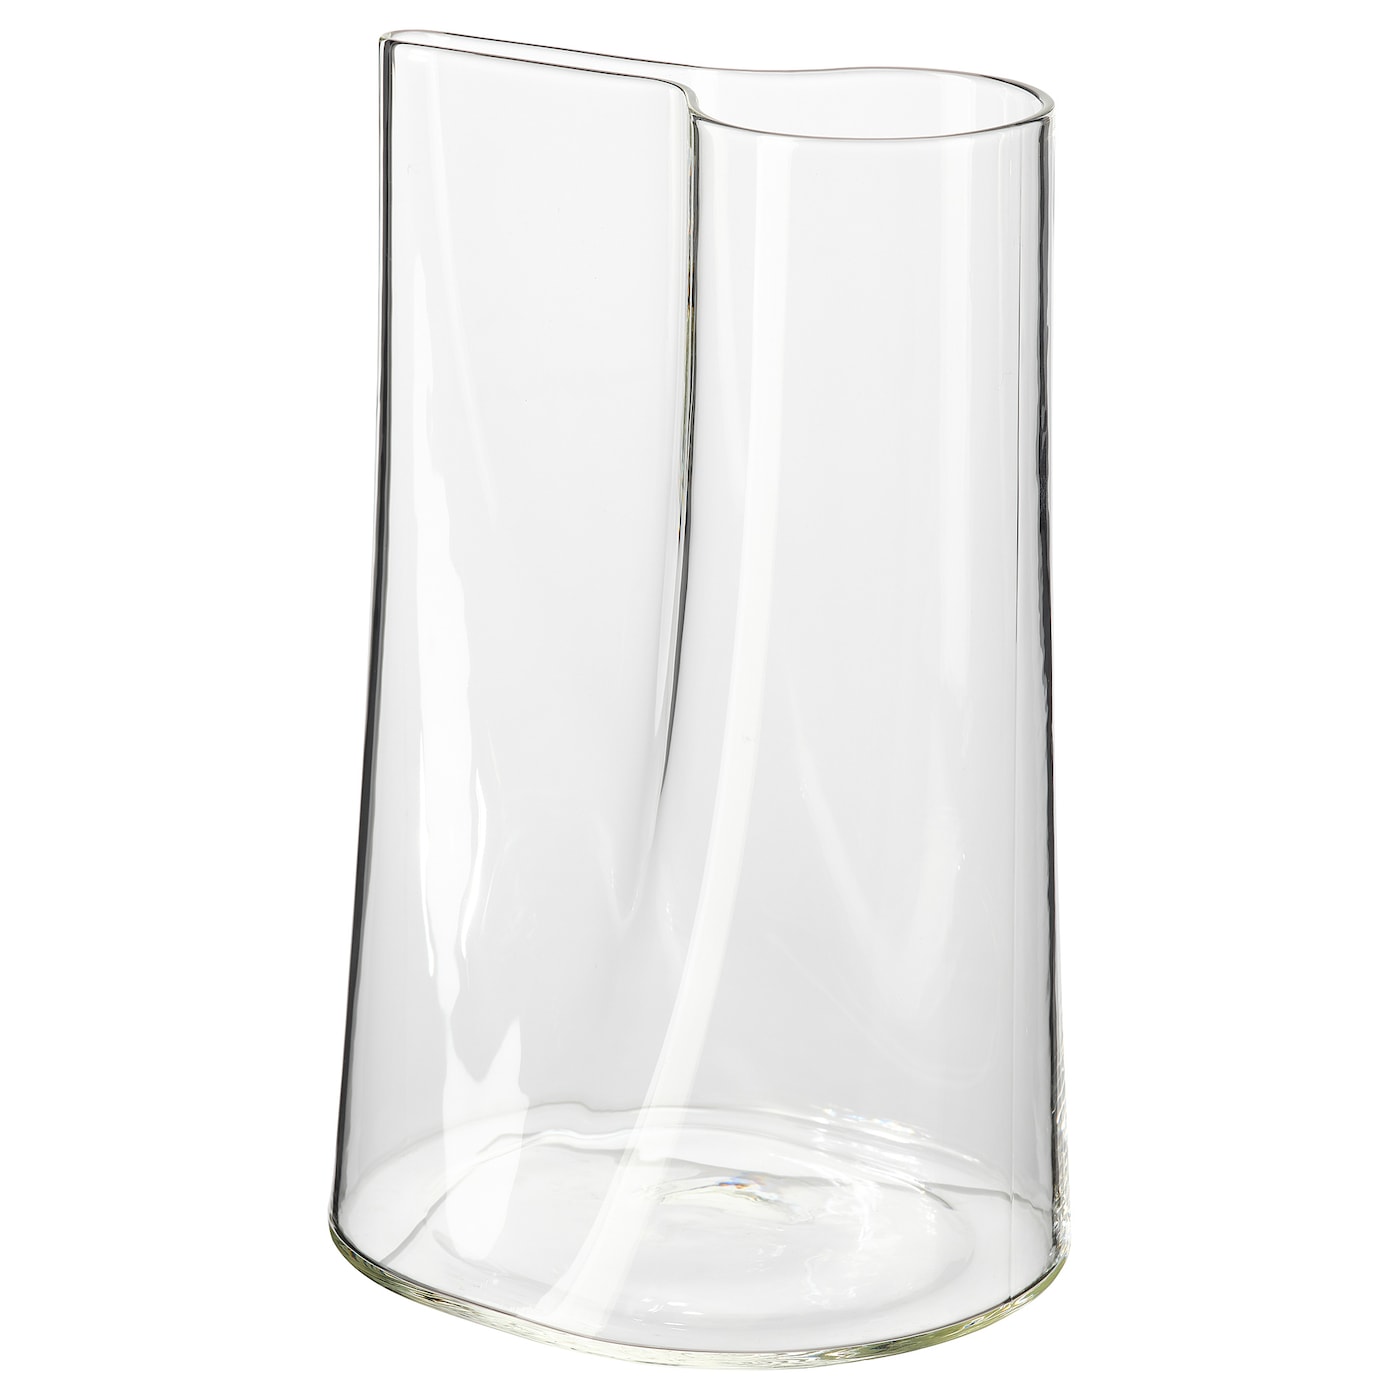 CHILIFRUKT ЧИЛИФРУКТ Ваза/лейка, прозрачное стекло, 21 см IKEA ваза для цветов грация новогодняя